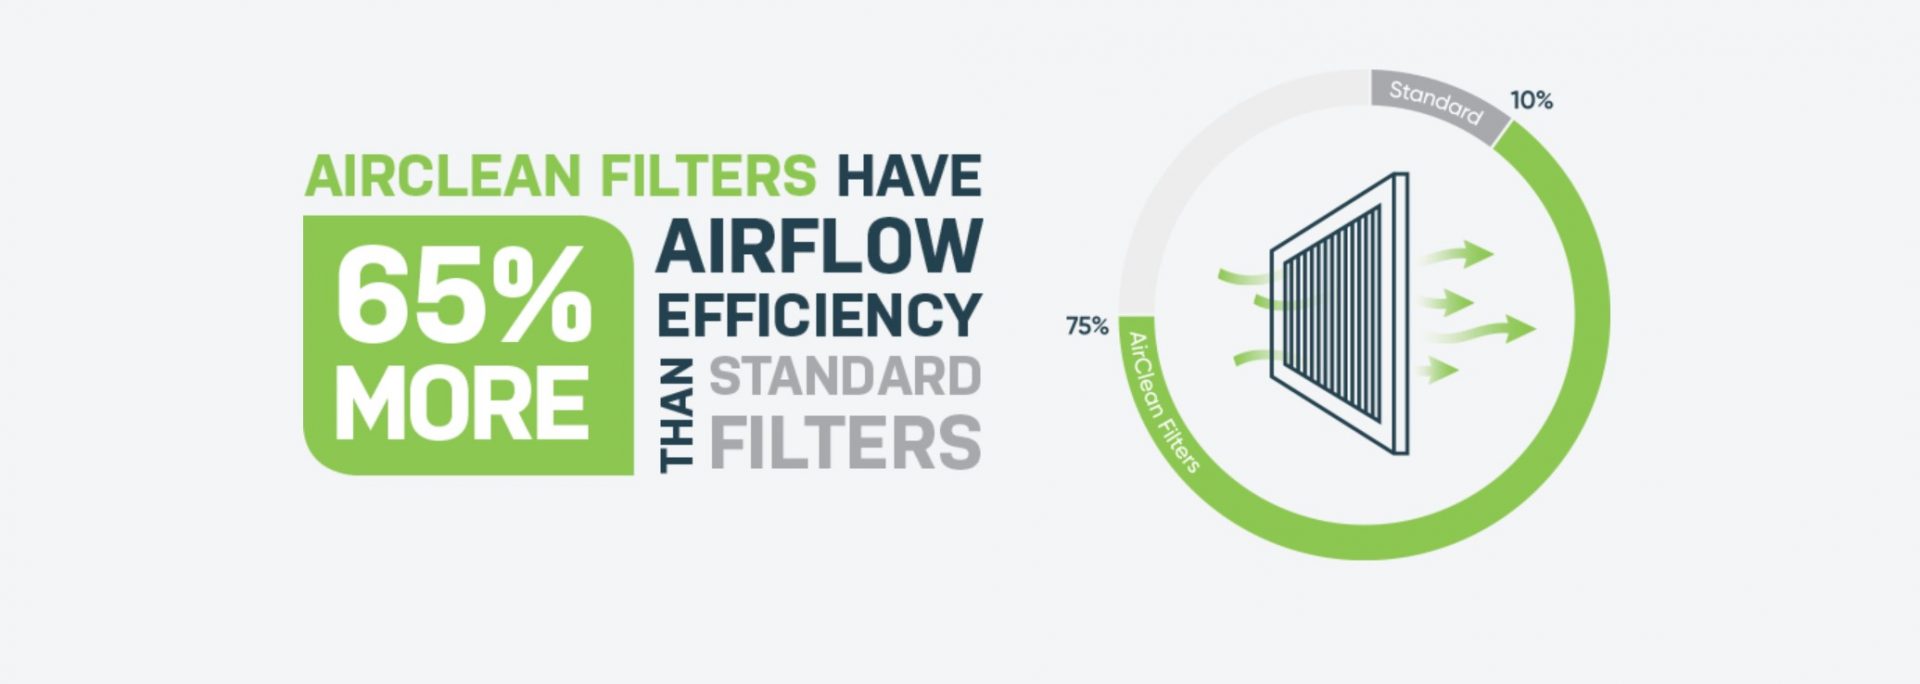 Politech Air Clean Filters Benefits